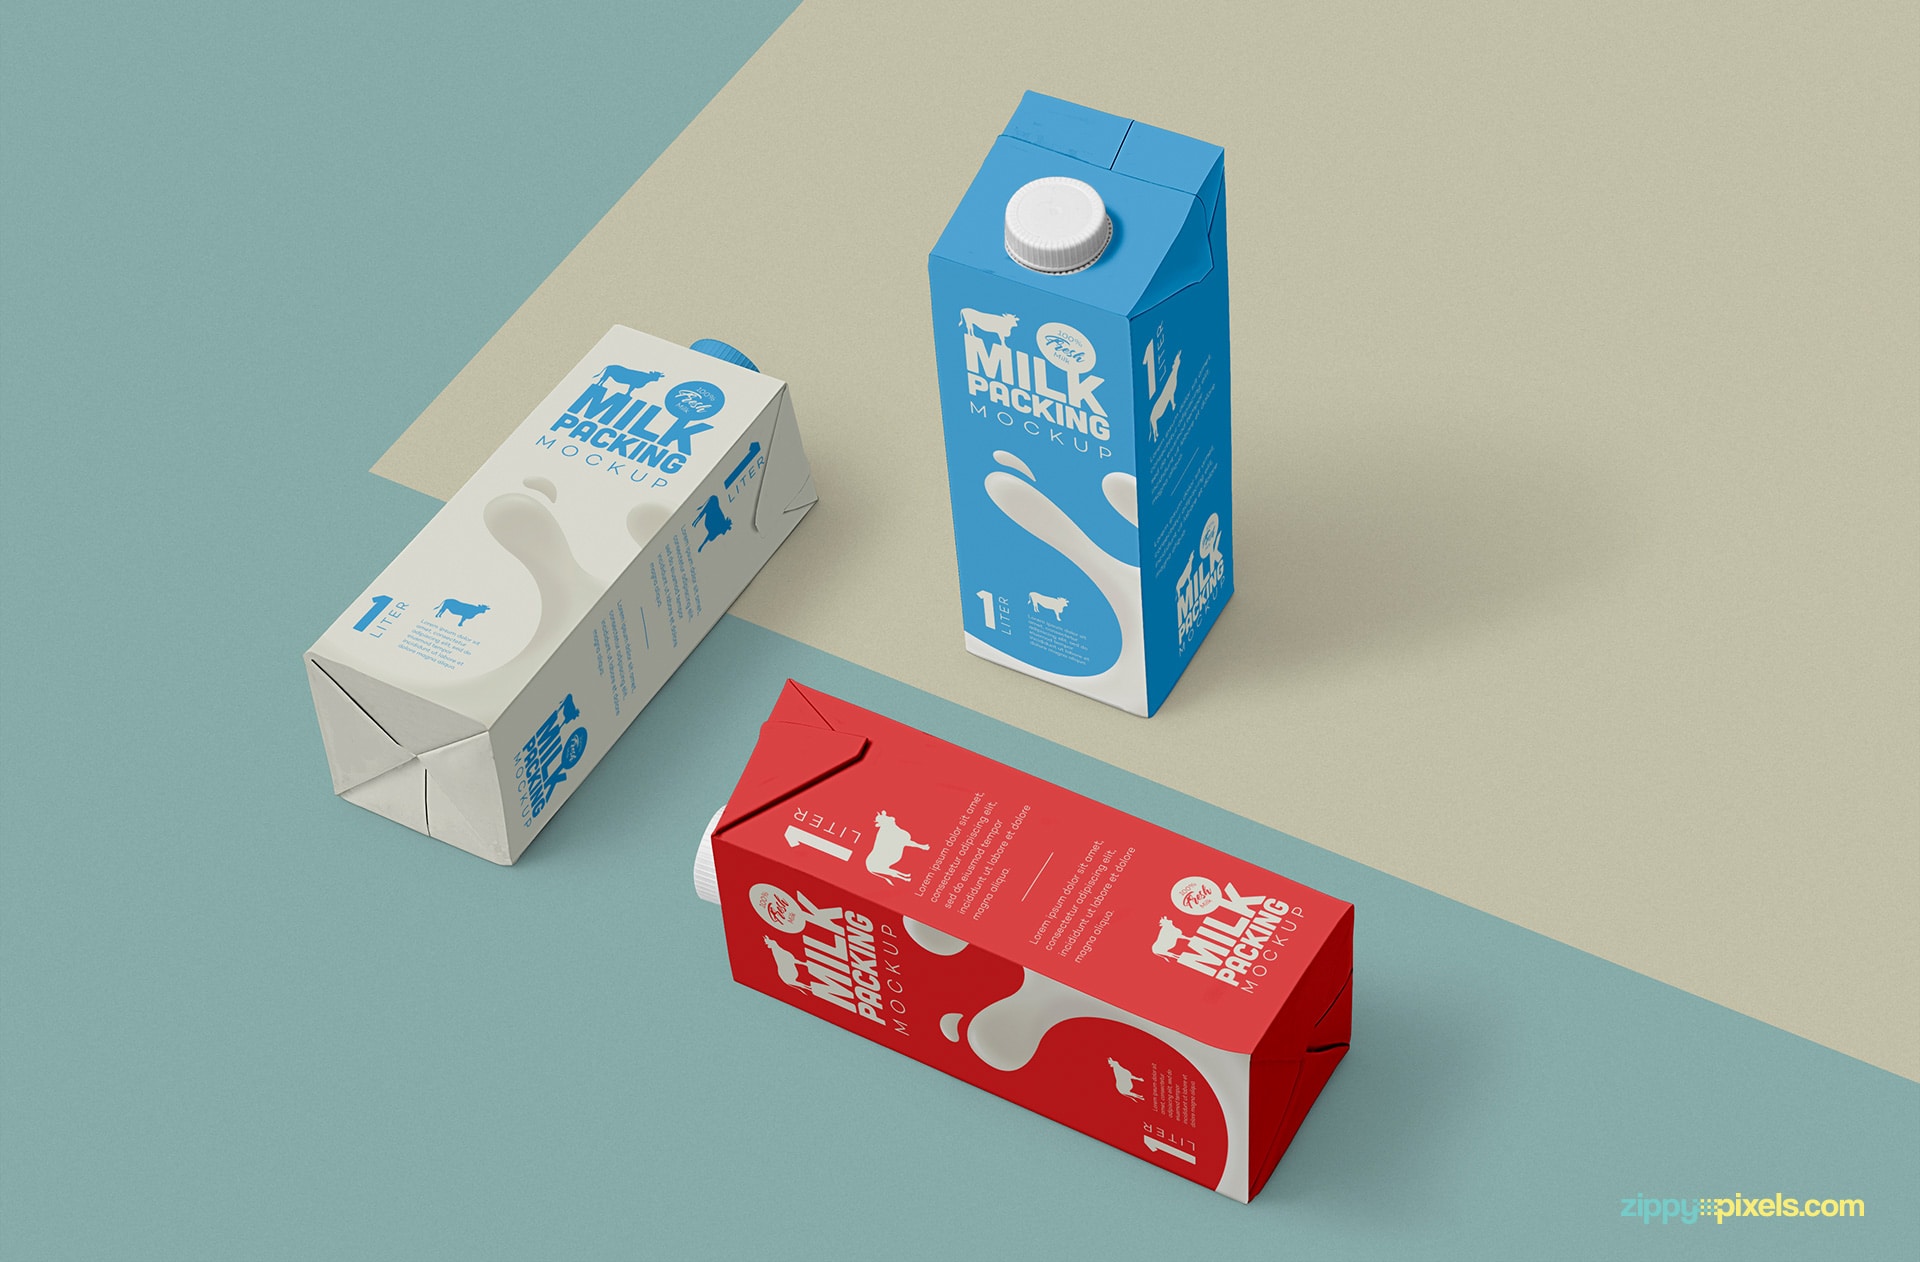 Milk carton mockup psd free download information